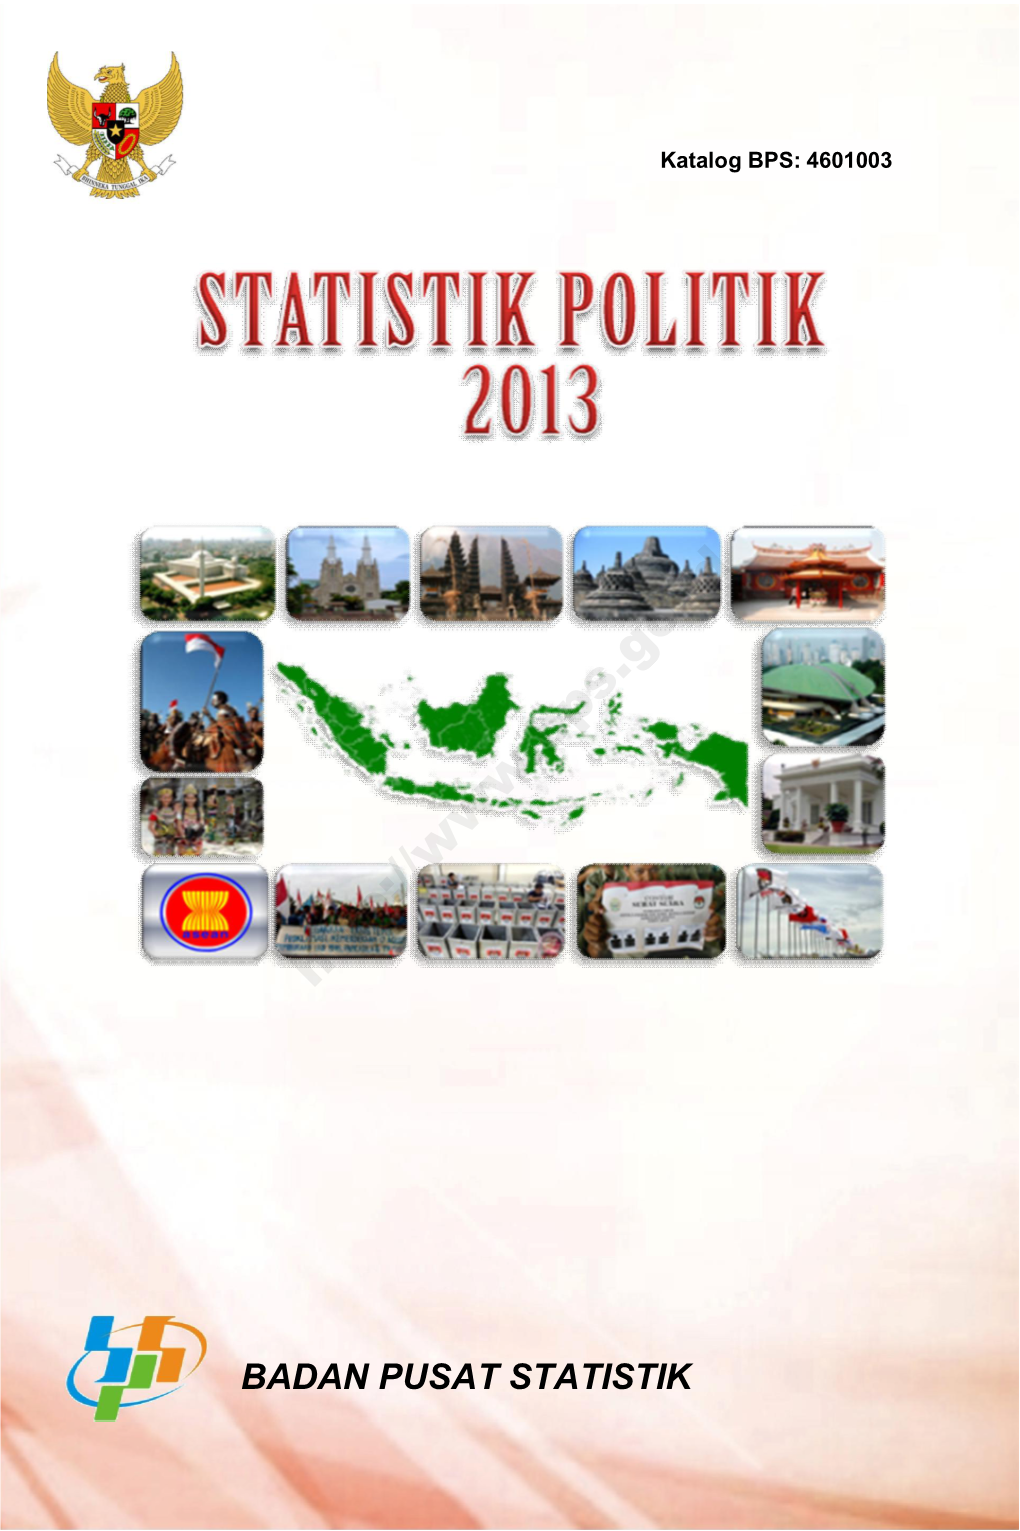 Political Statistics 2013